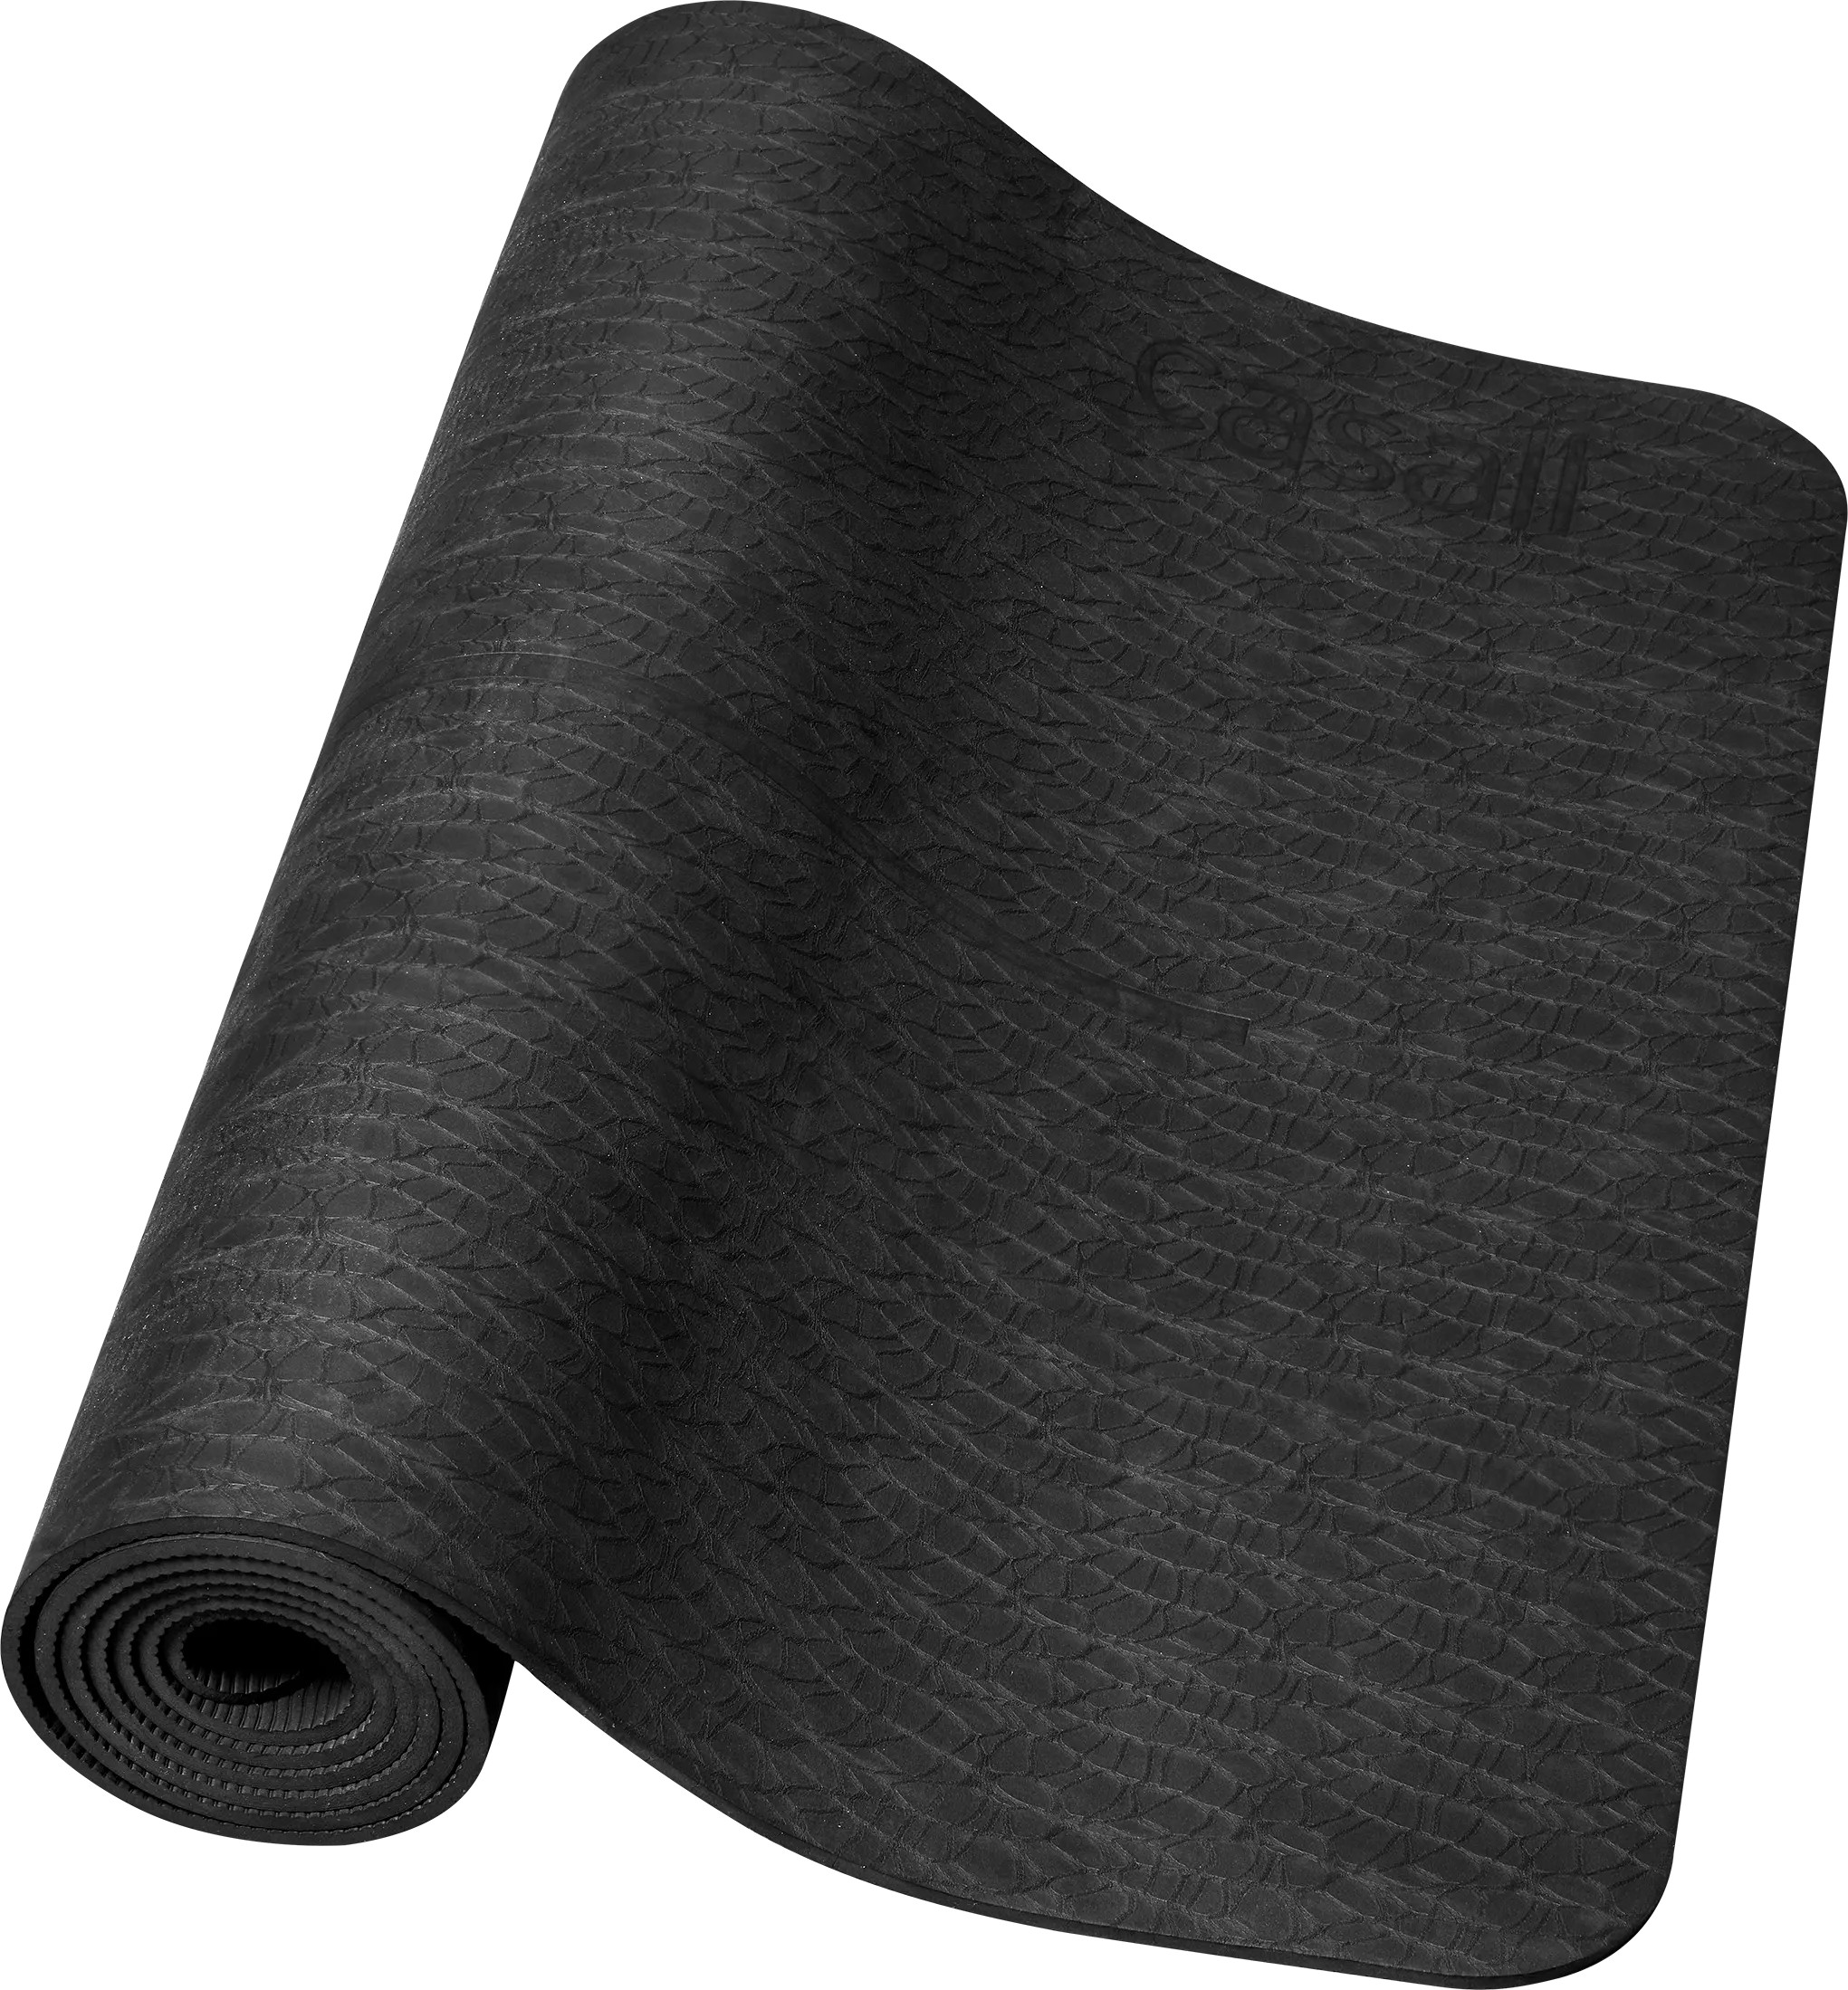 CASALL Exercise Mat Cushion 5mm PVC Free Black